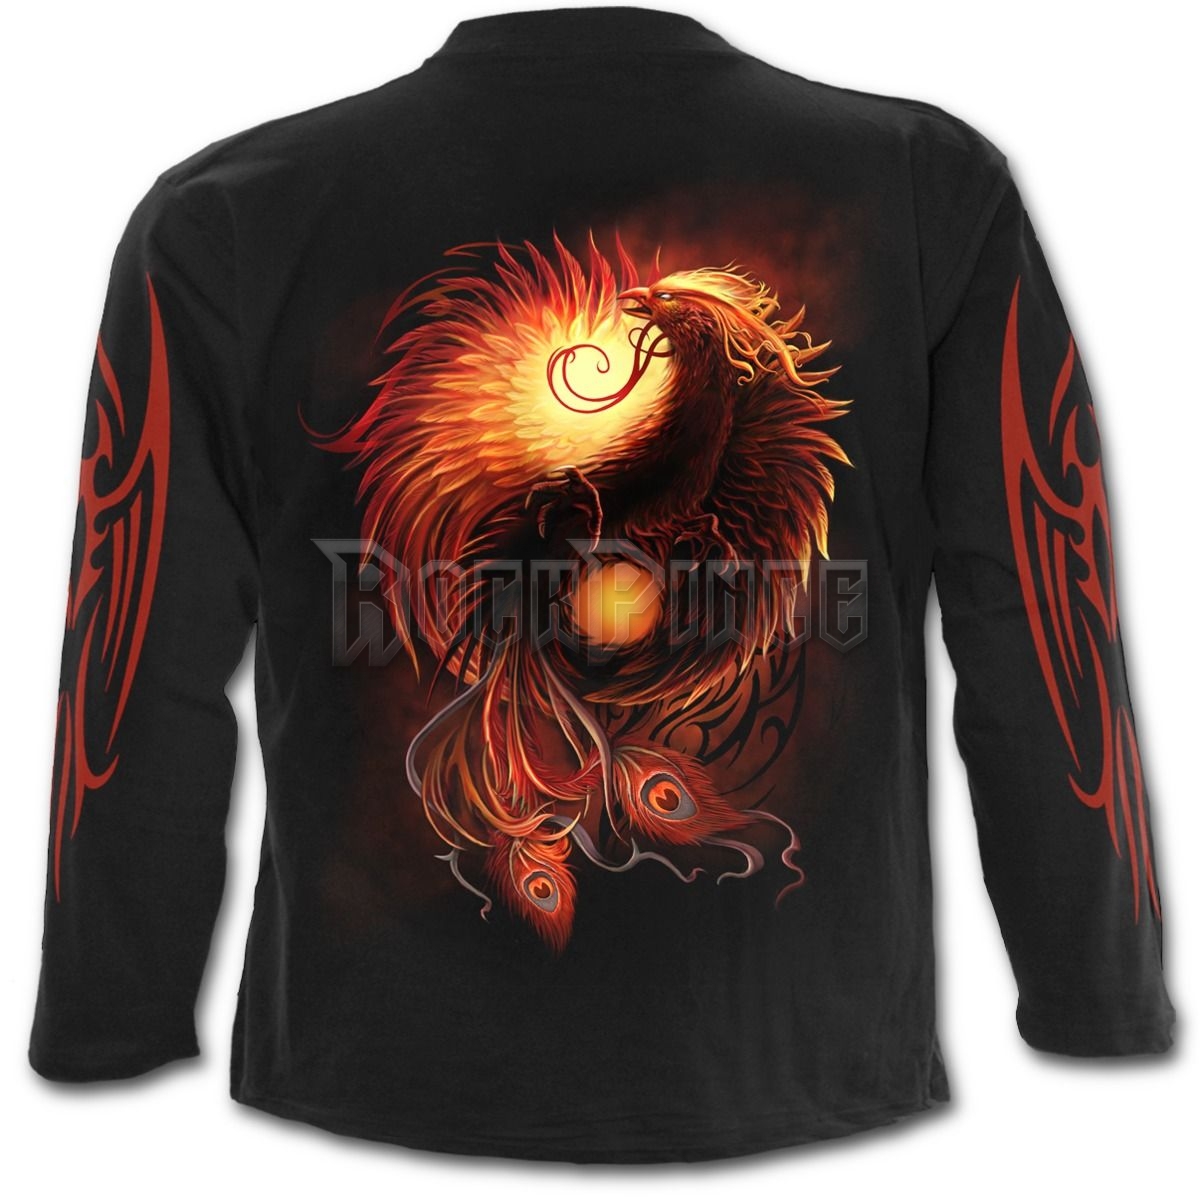 PHOENIX ARISEN - Longsleeve T-Shirt Black - T145M301